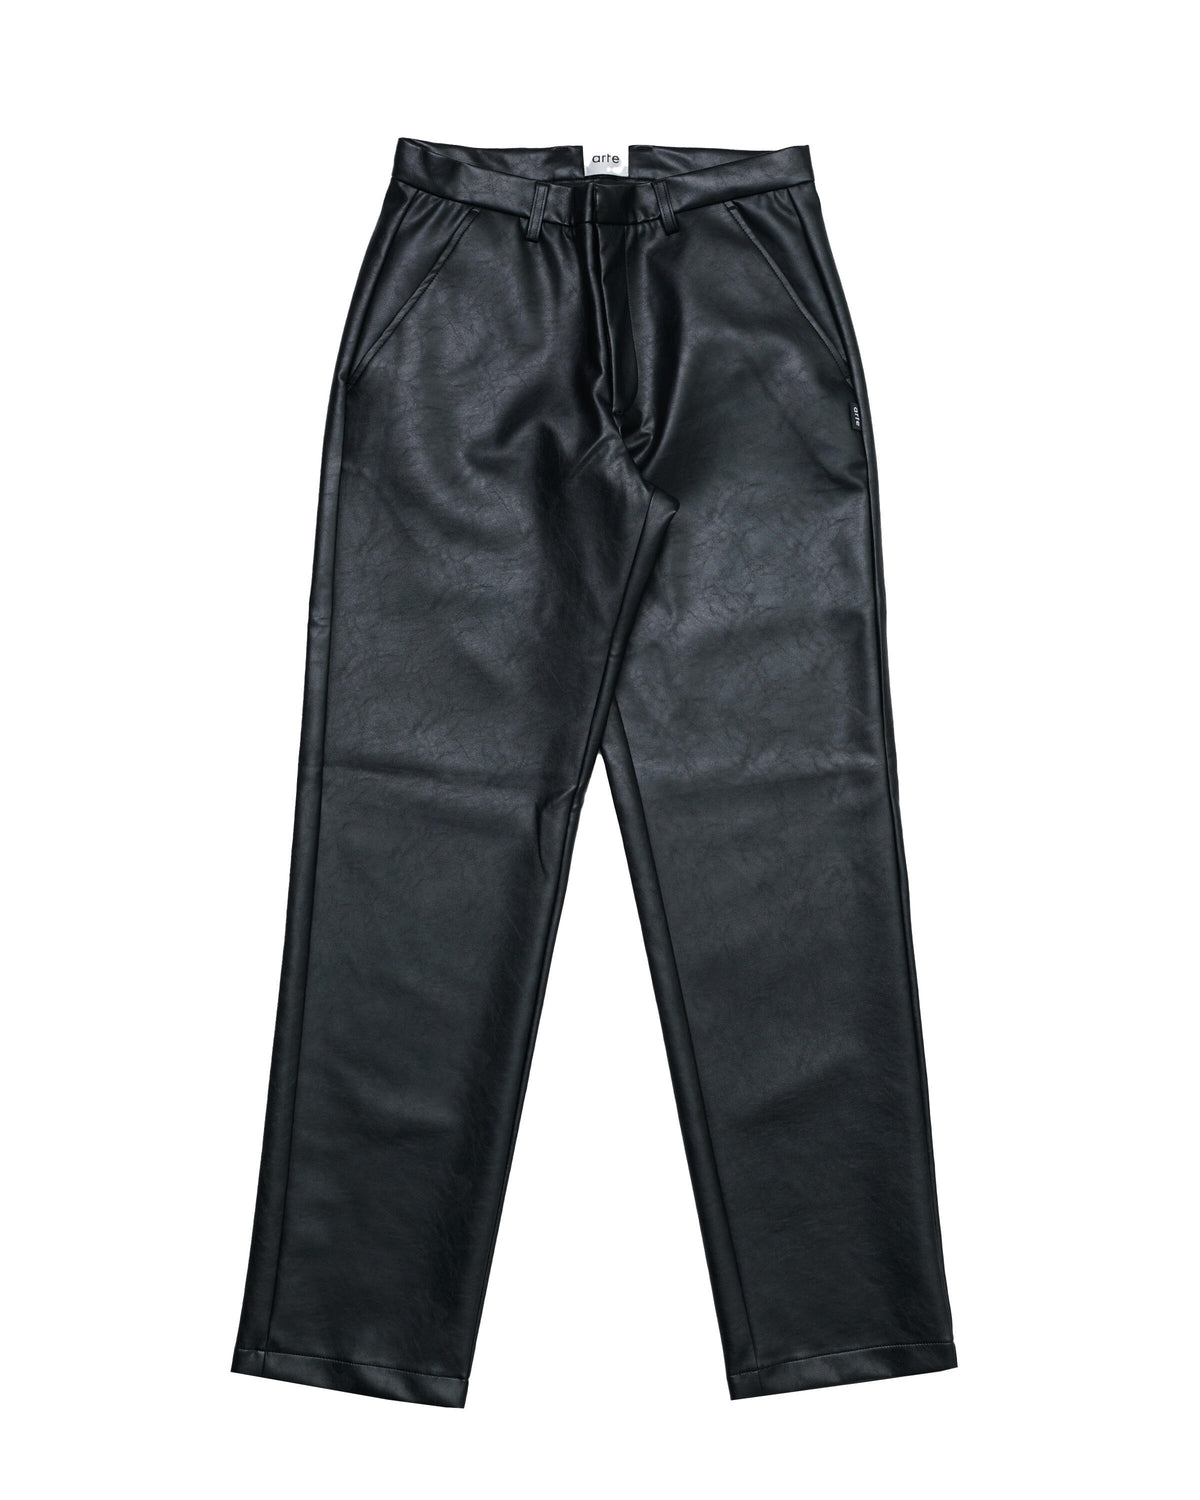 Arte Antwerp Leather Suit Pants